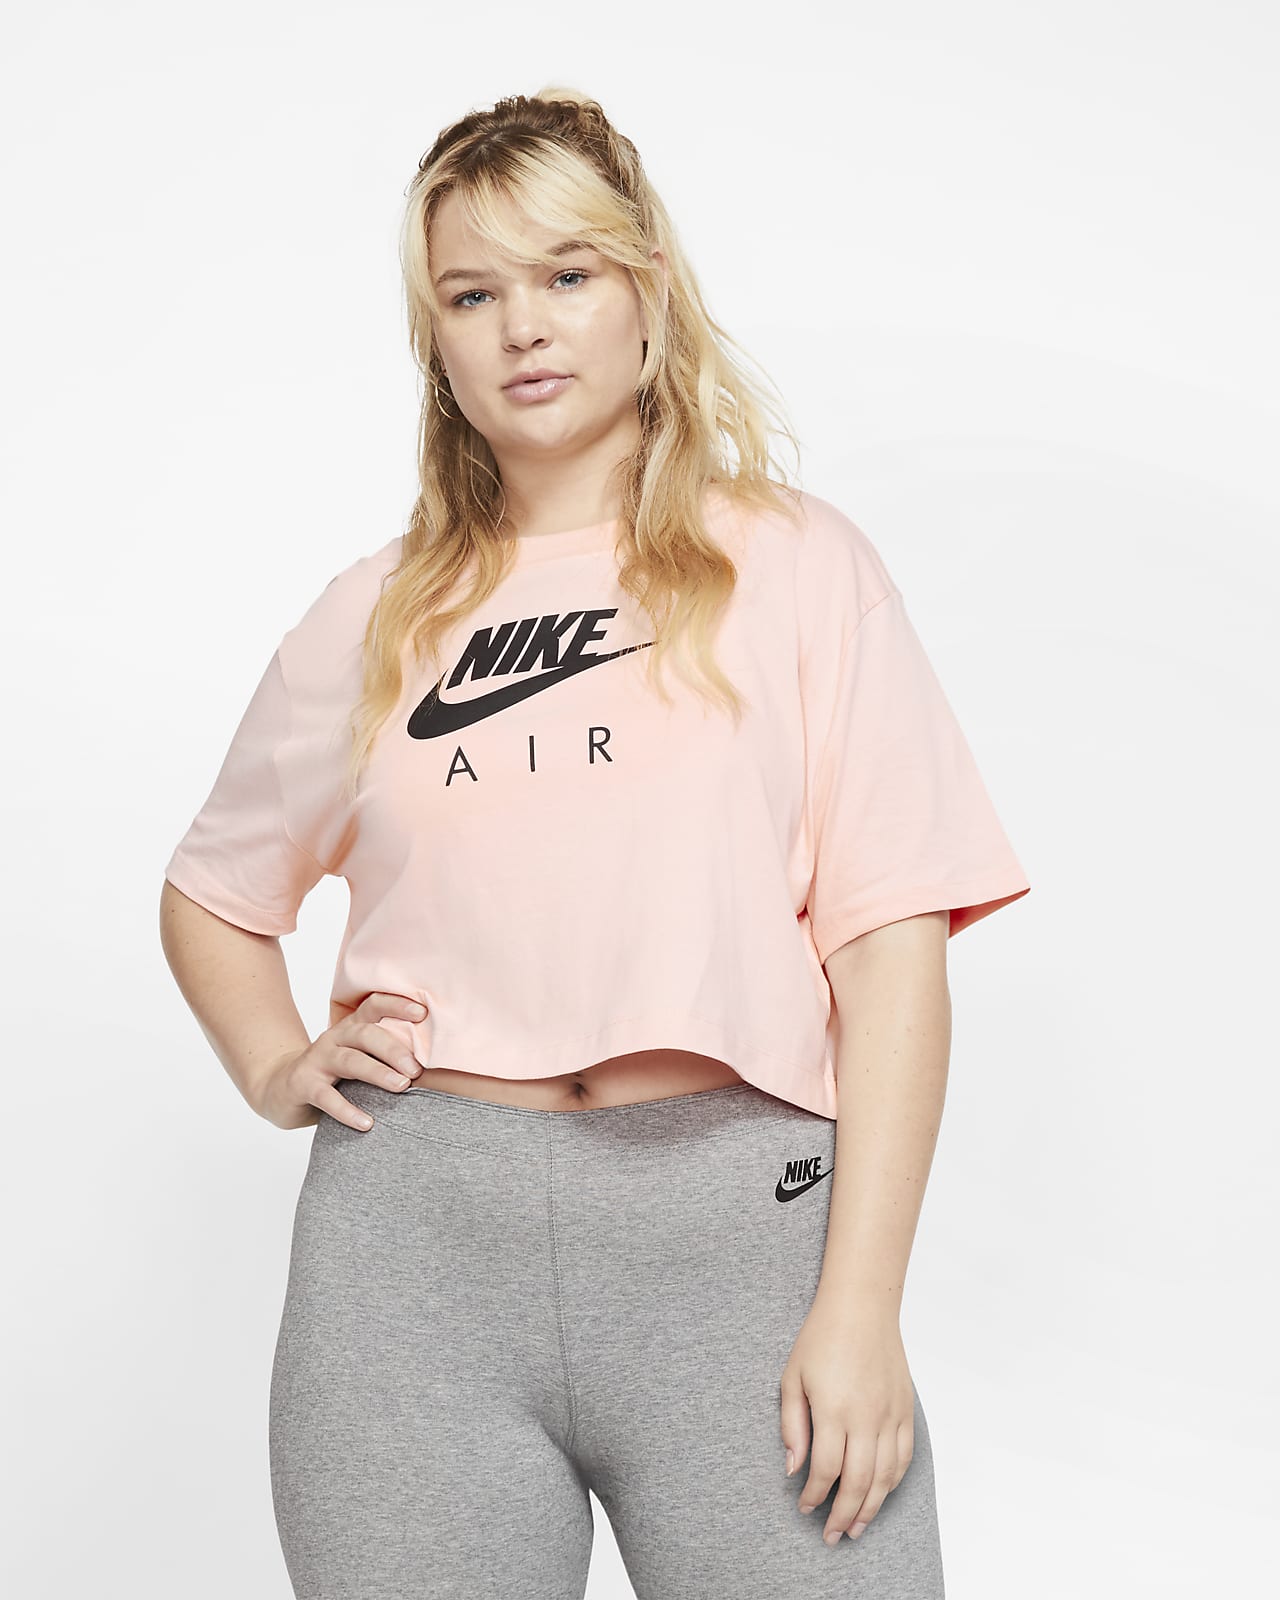 Nike Air Women's Short-Sleeve Top (Plus Size)